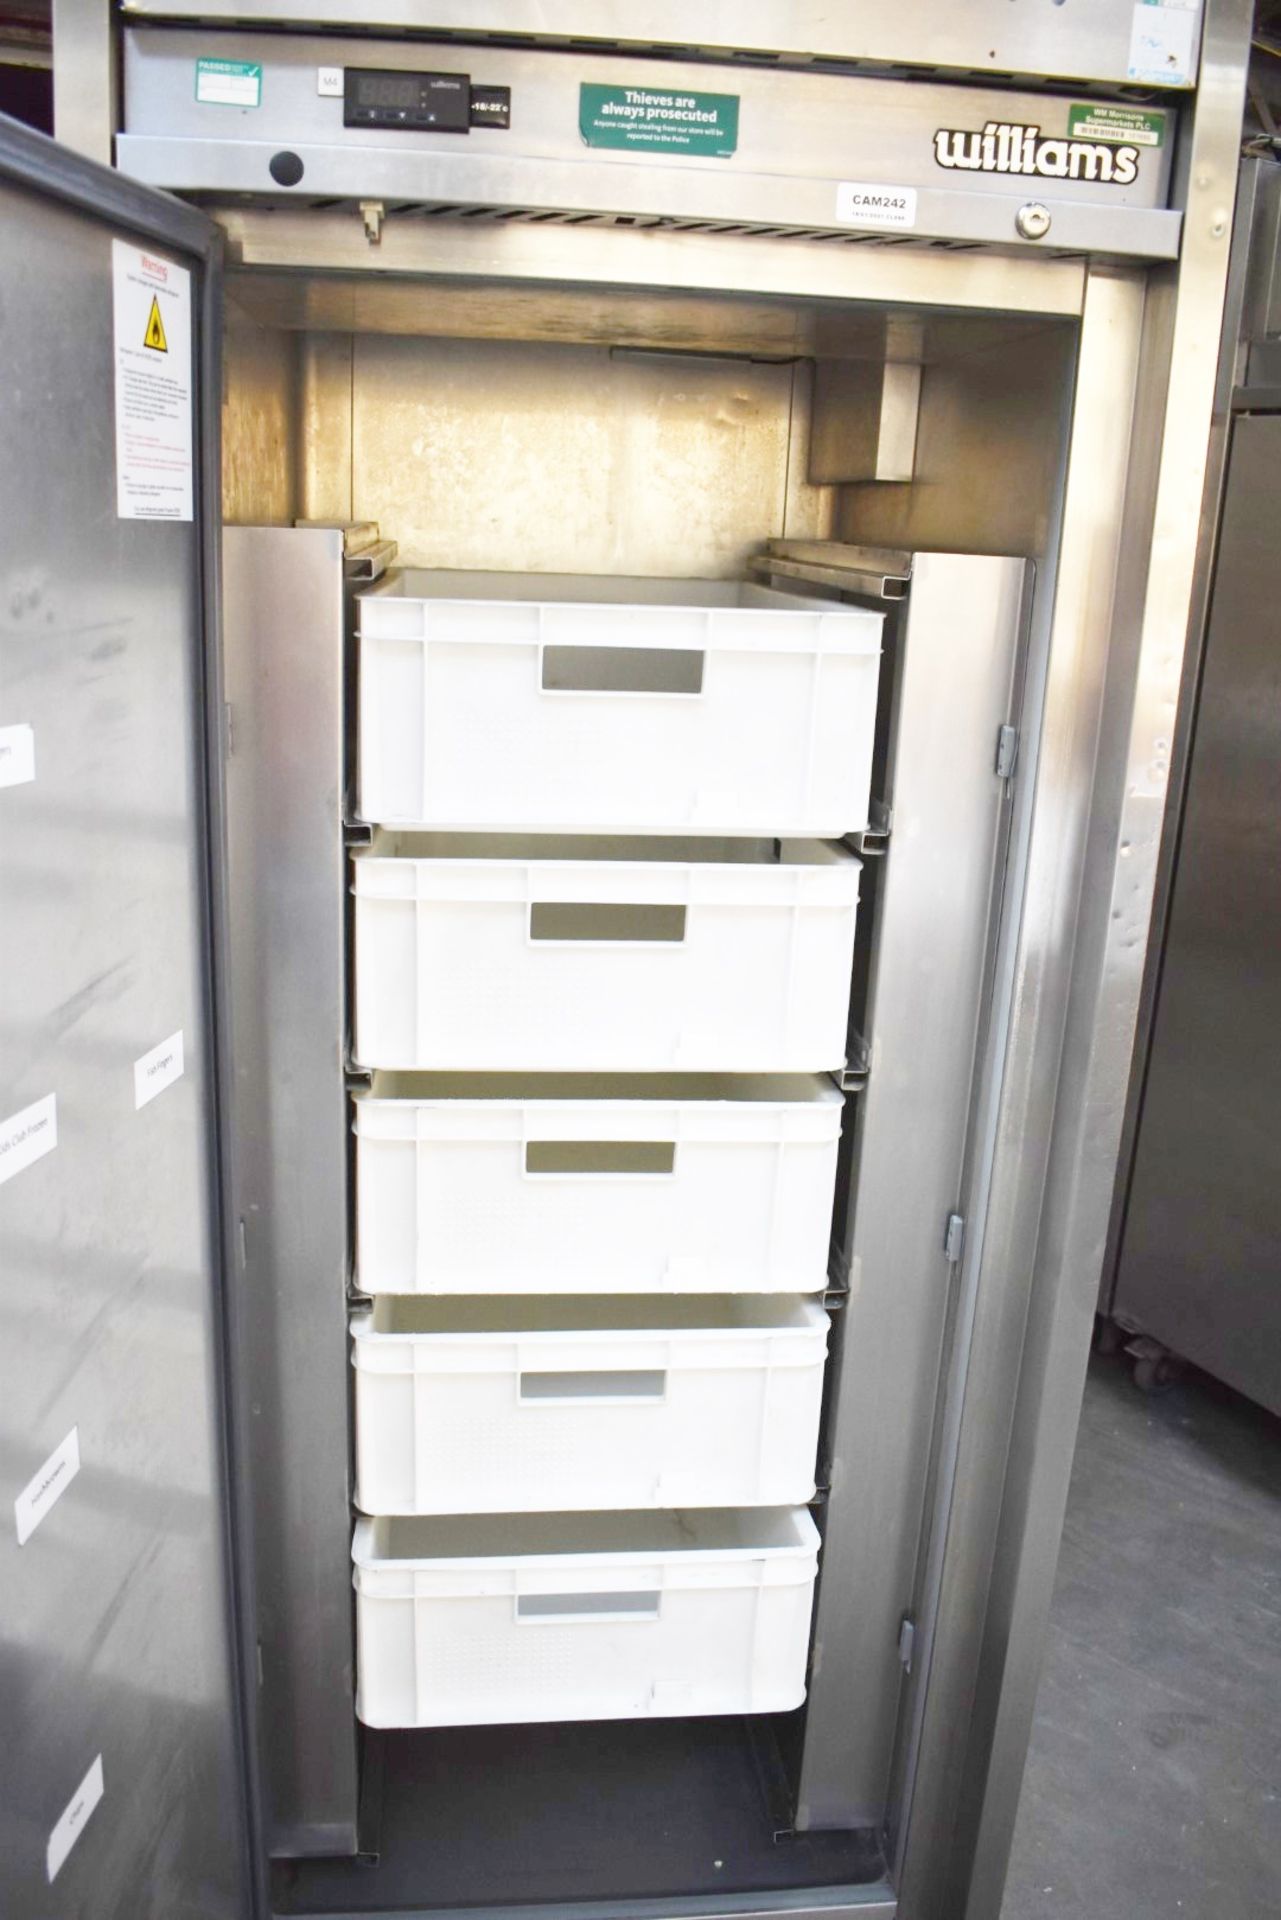 1 x Williams Jade Upright Single Door Refrigerator Stainless Steel Exterior & Internal Bakery Trays - Image 4 of 8